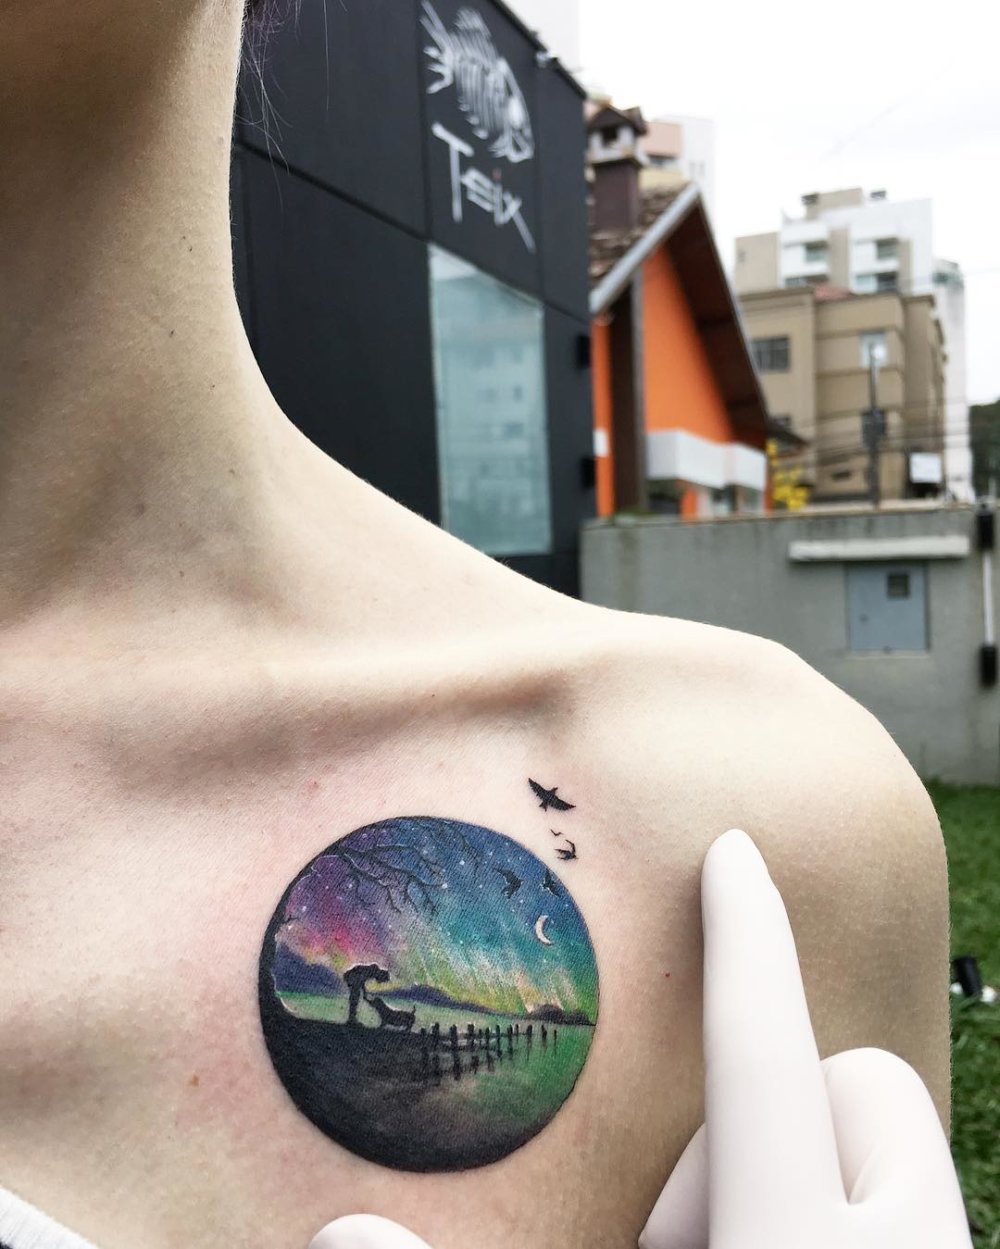 Dazzlingly Beautiful Illustration Tattoos Inside Tiny Circles By Eva Krbdk 16